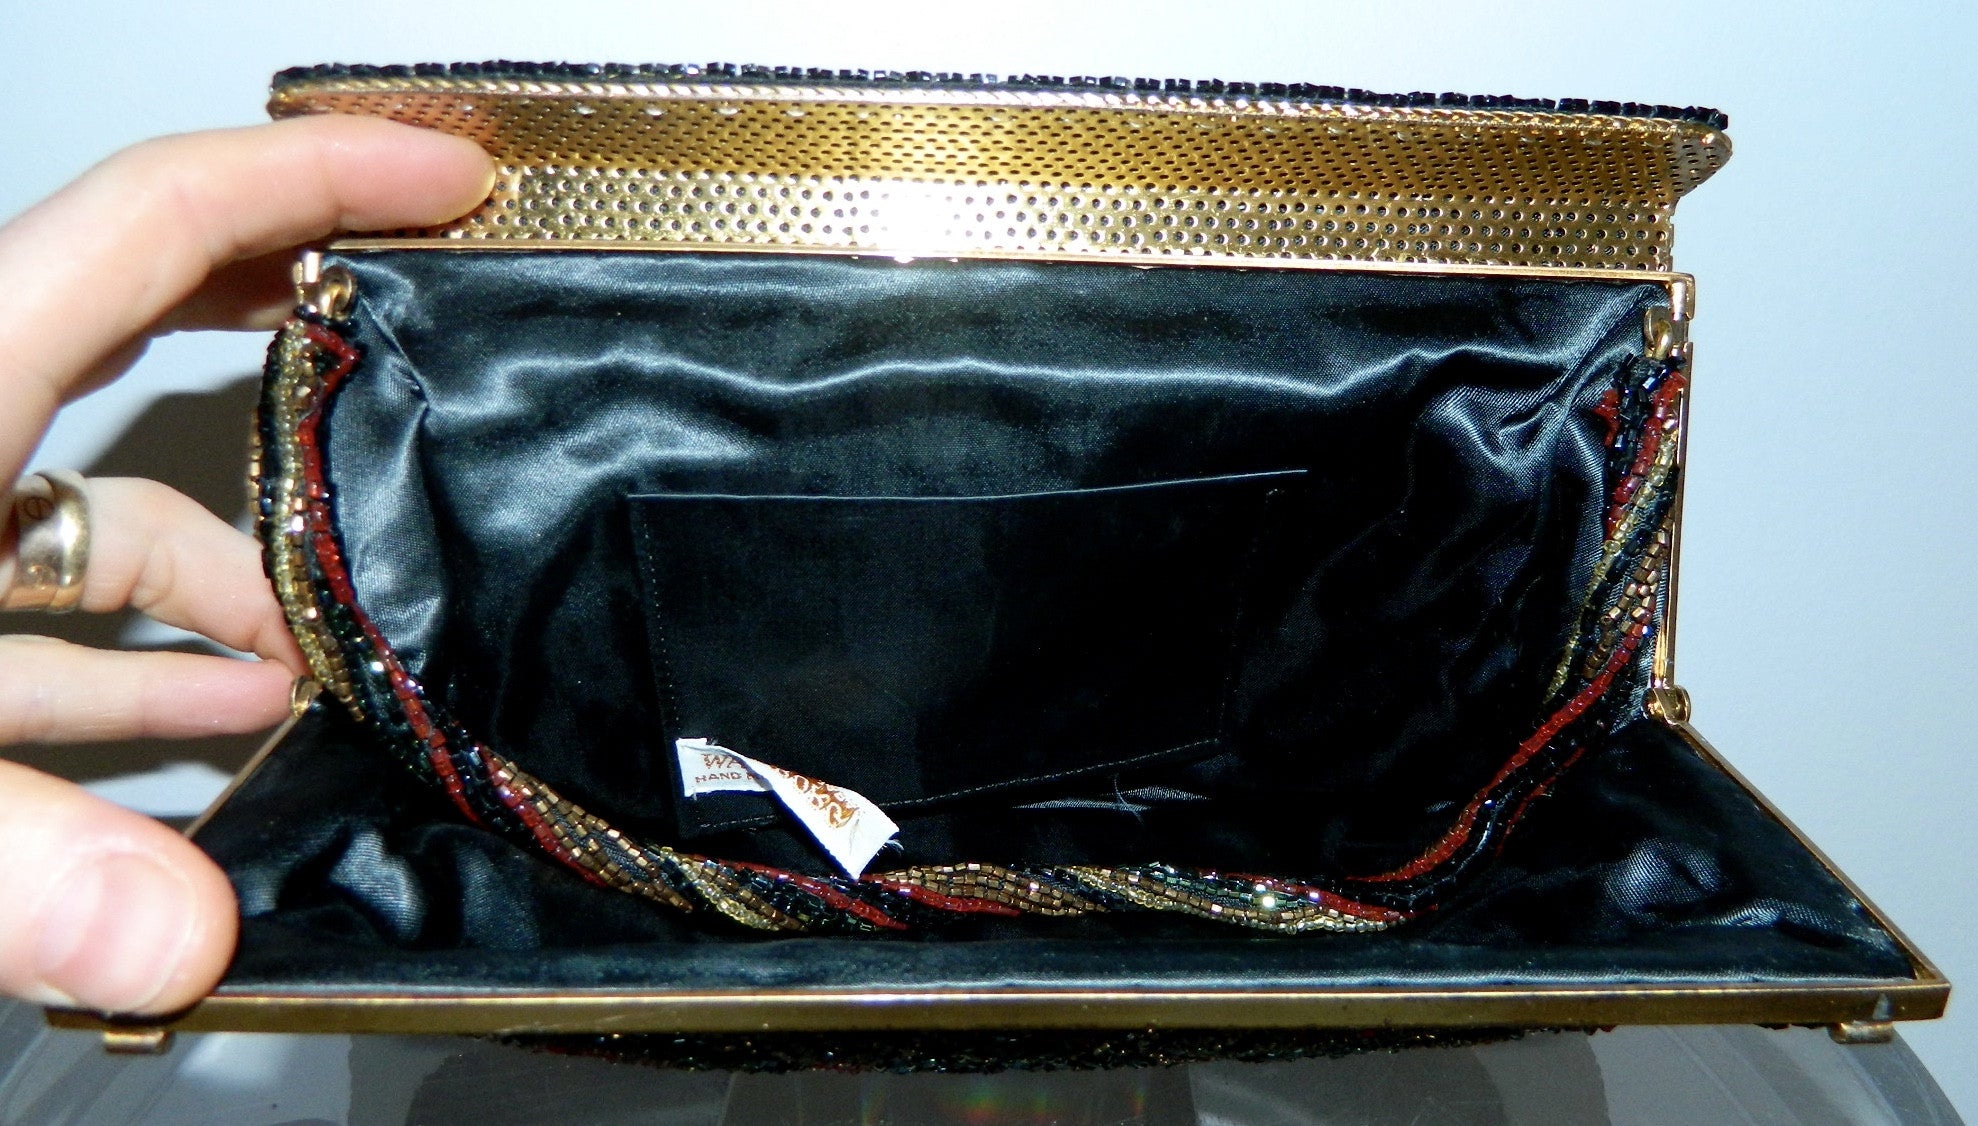 vintage black beaded evening bag 1950s WALBORG paisley clutch handbag